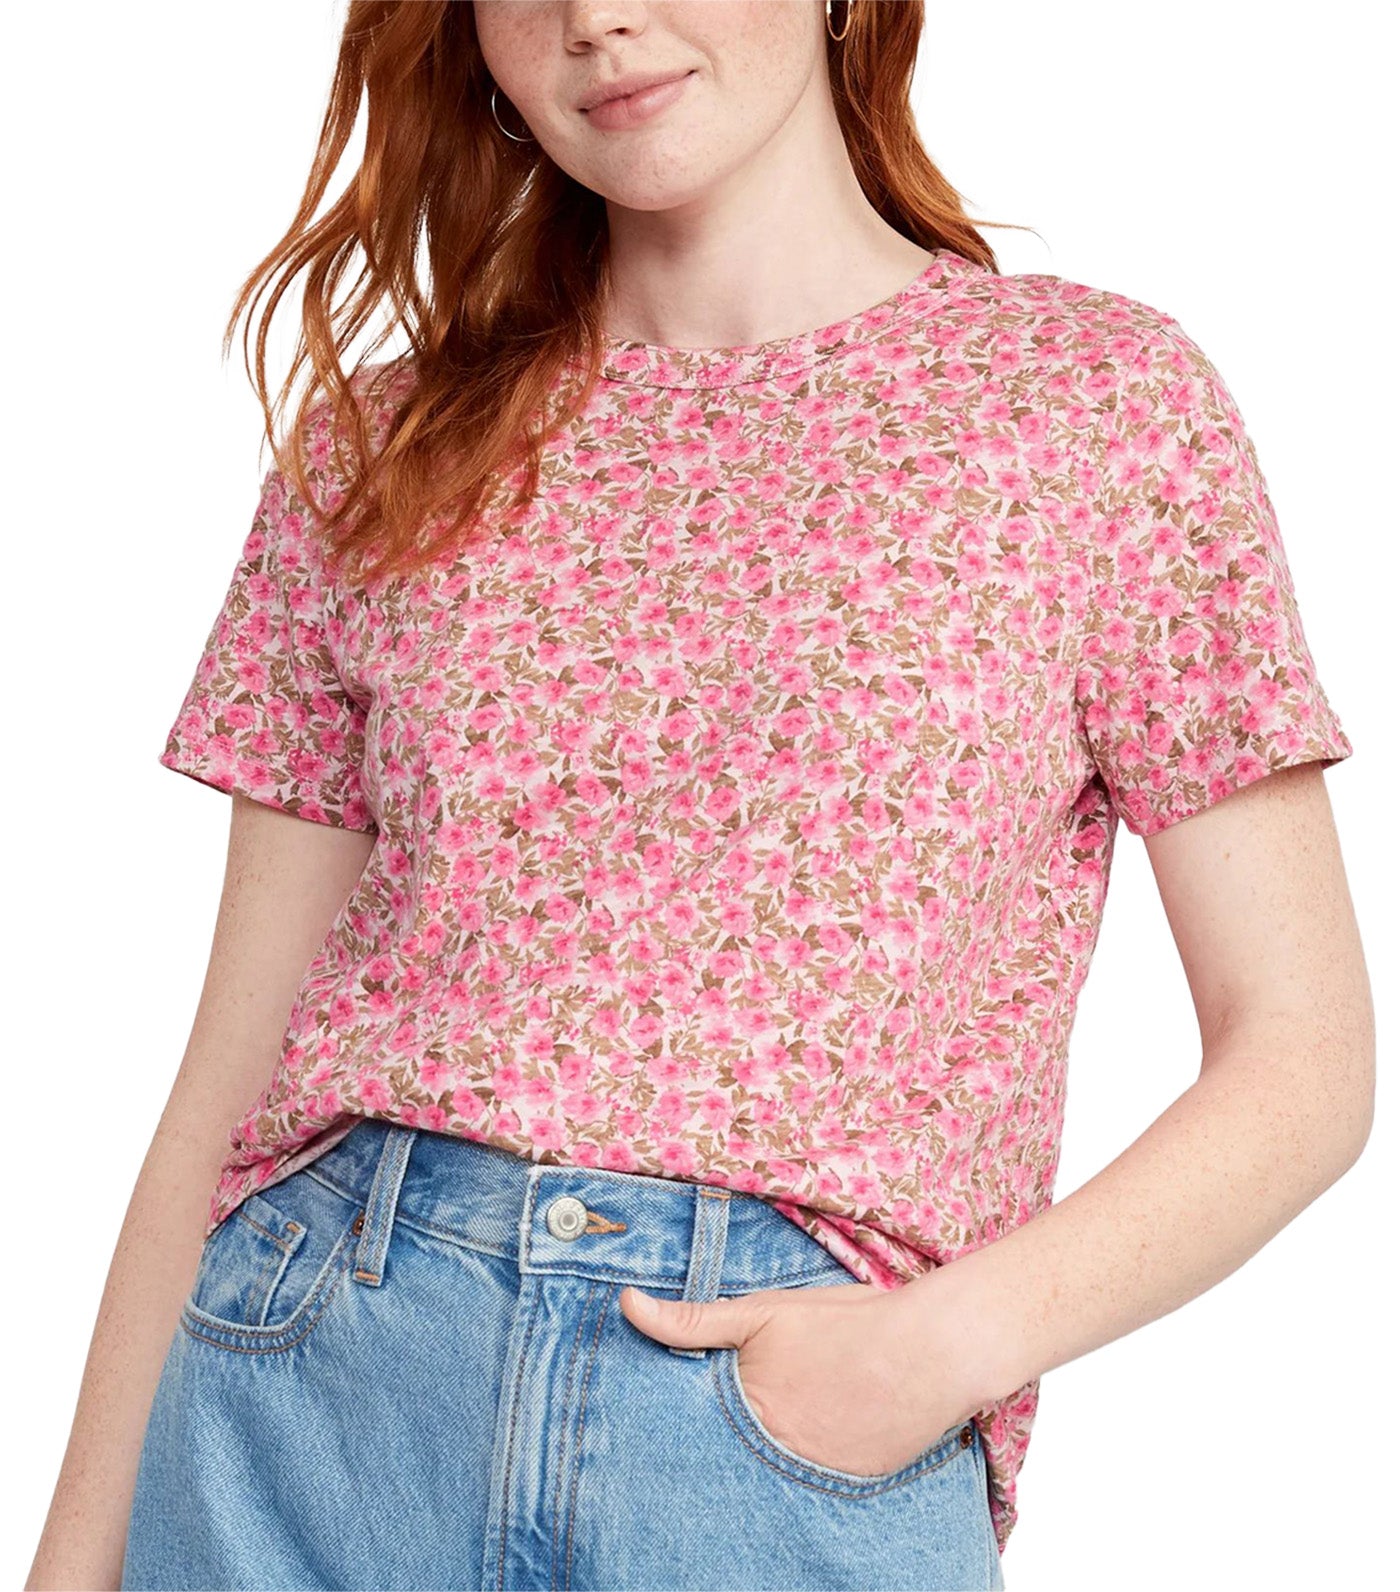 EveryWear Printed Slub-Knit T-Shirt for Women Pink Floral Combo